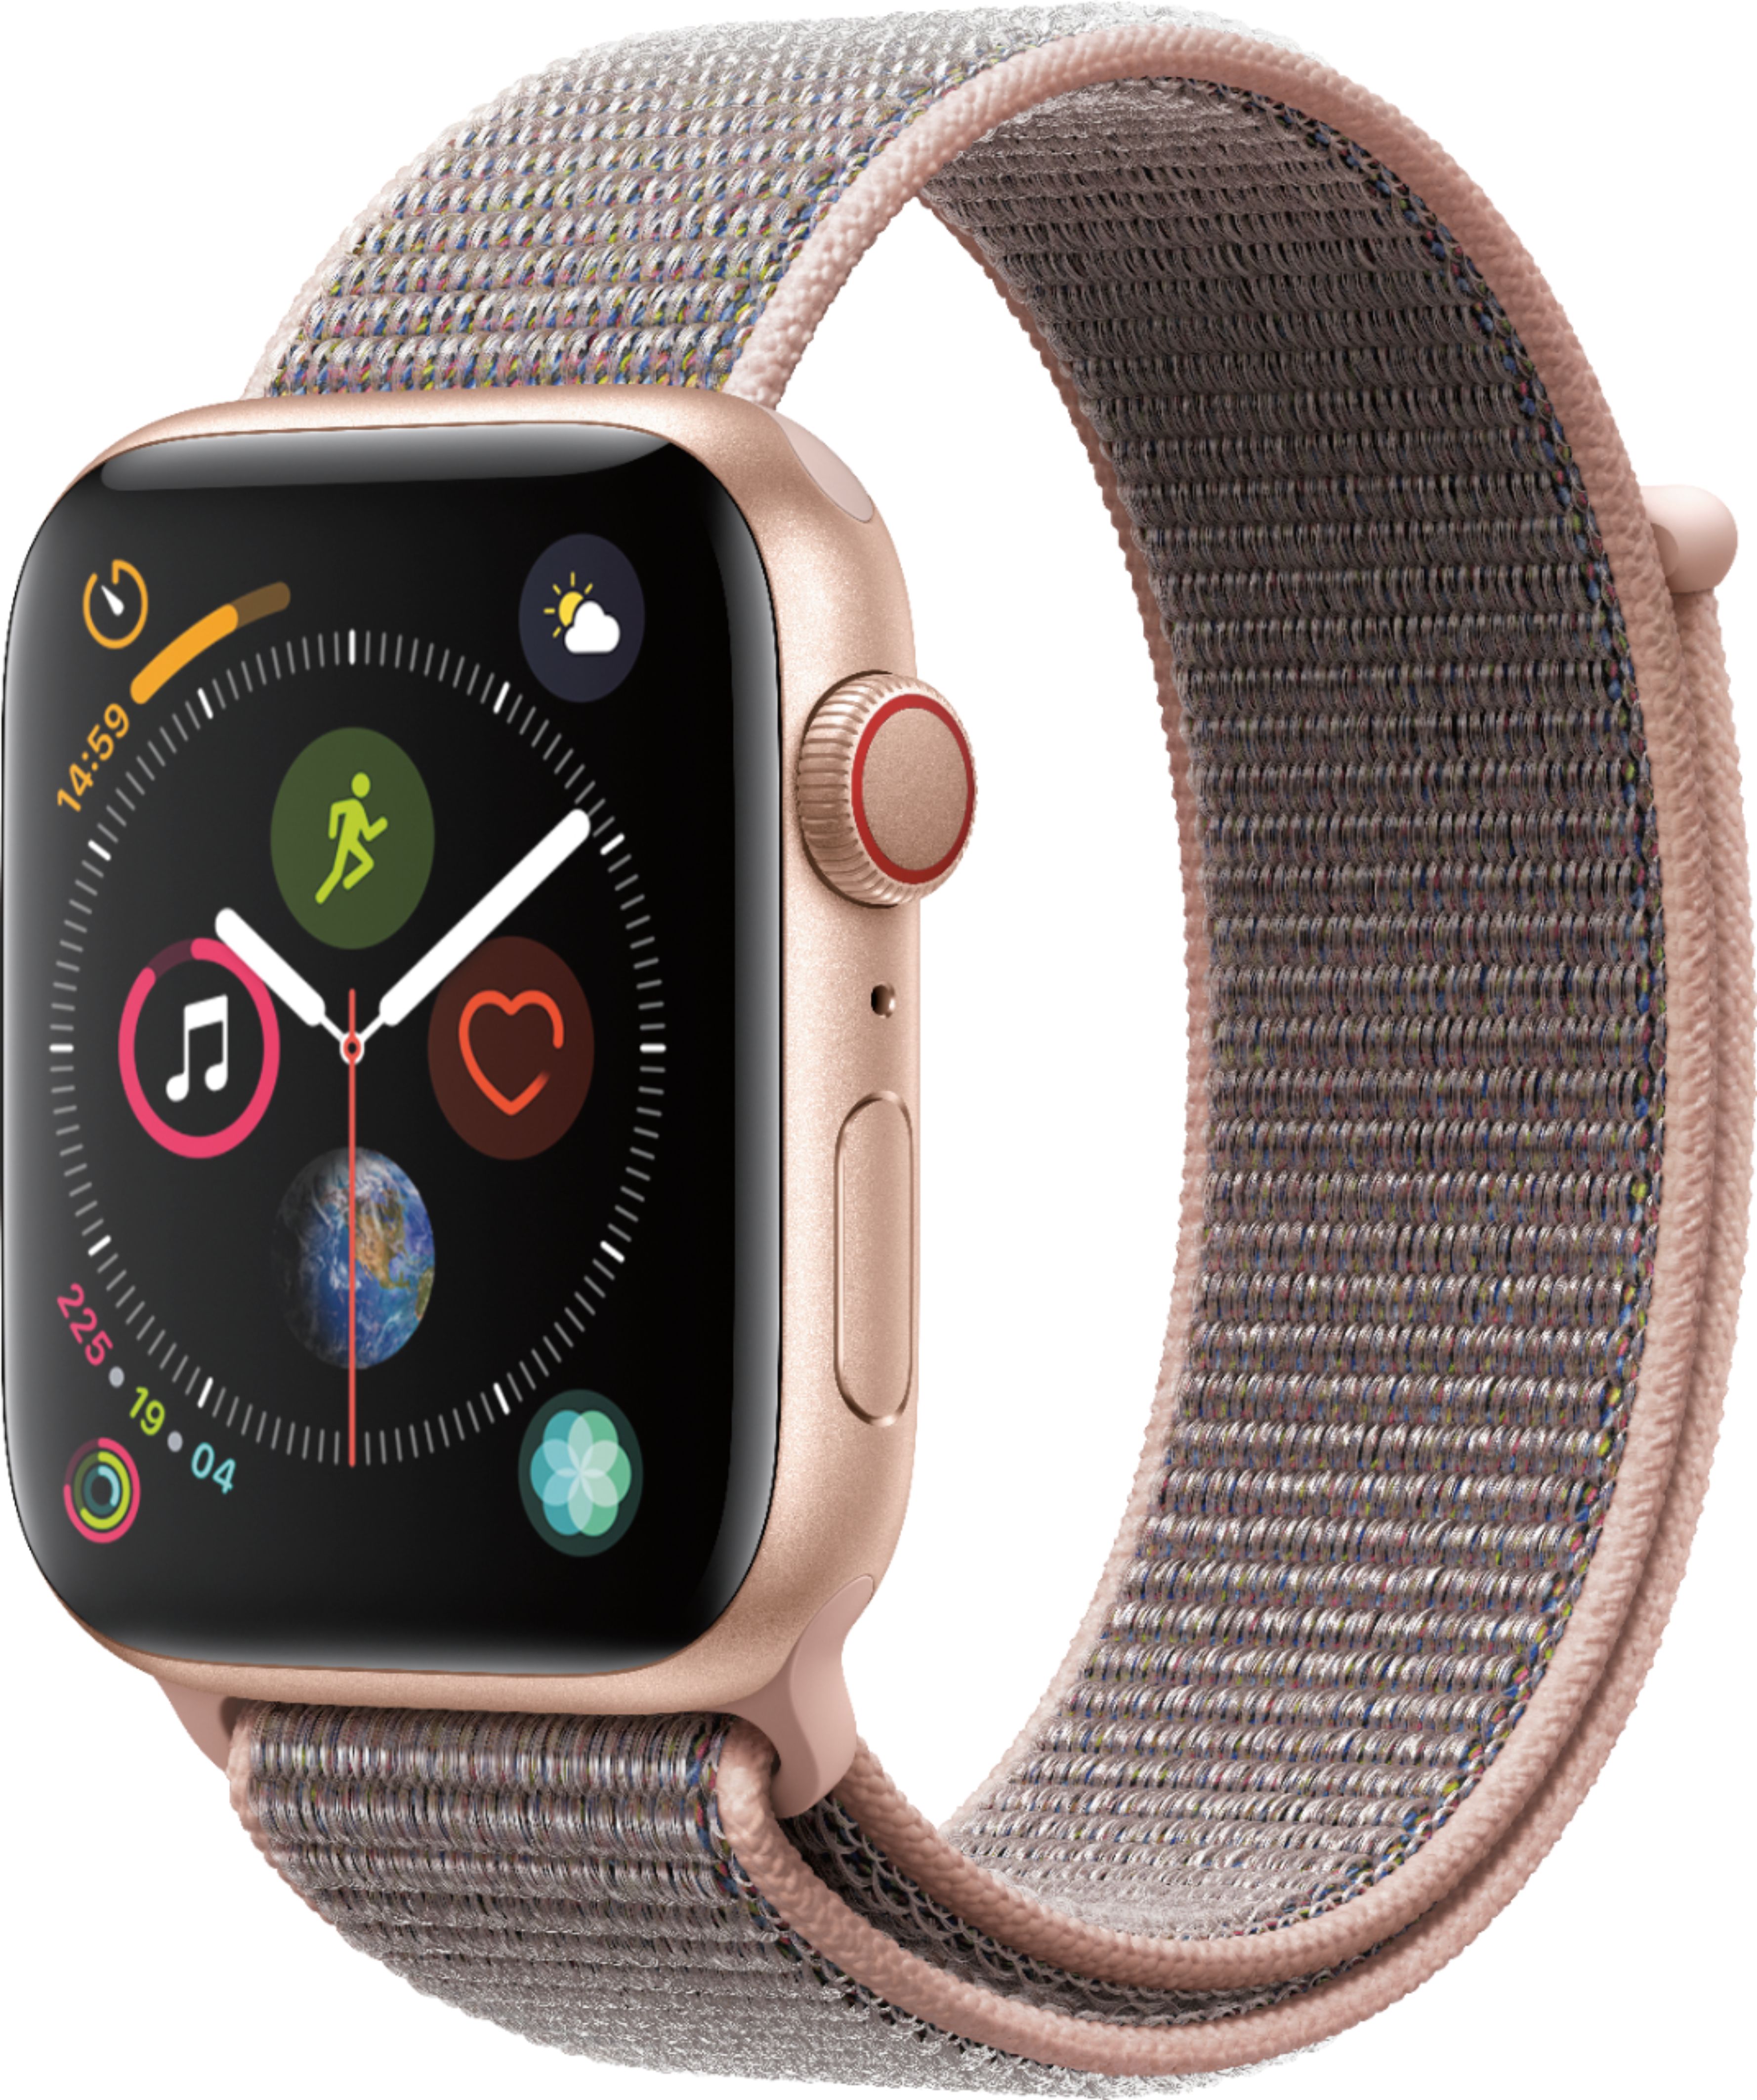 Apple Watch Rose Gold Serie 4 Deals, 53% OFF | www.playamazarron.com